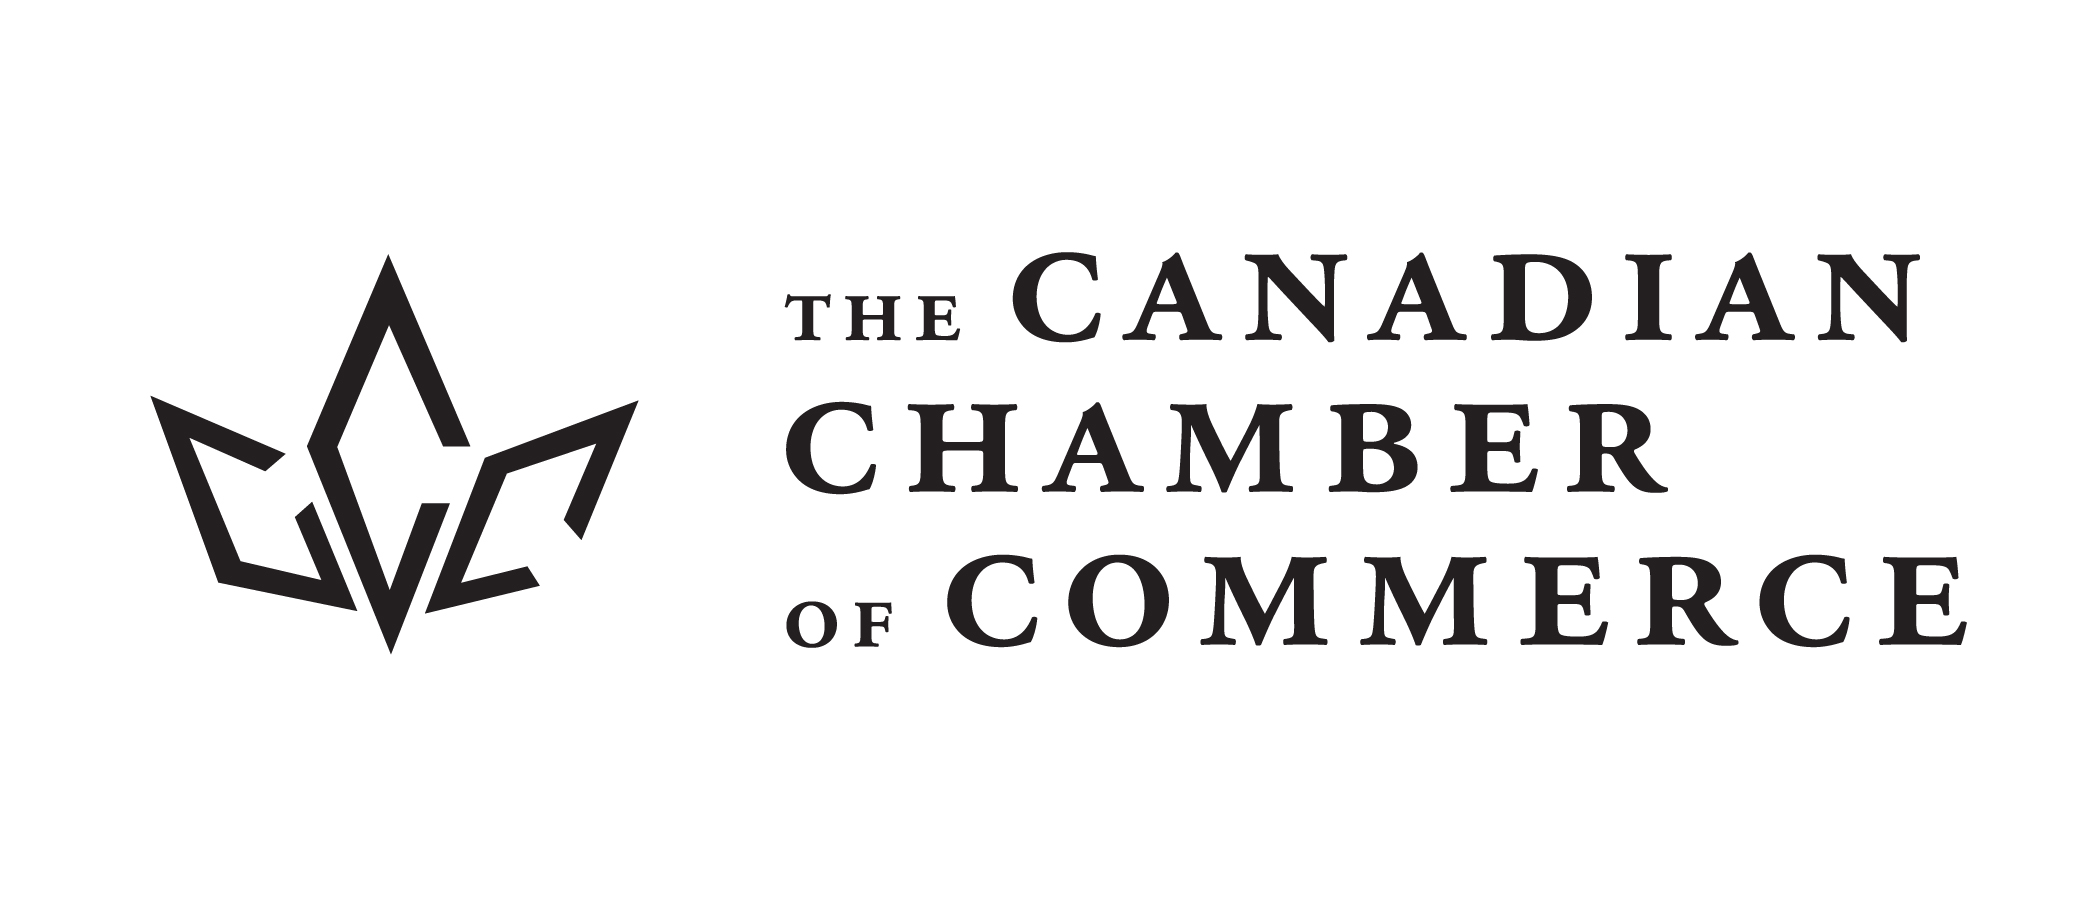 The Canadian Chamber ot Commerce